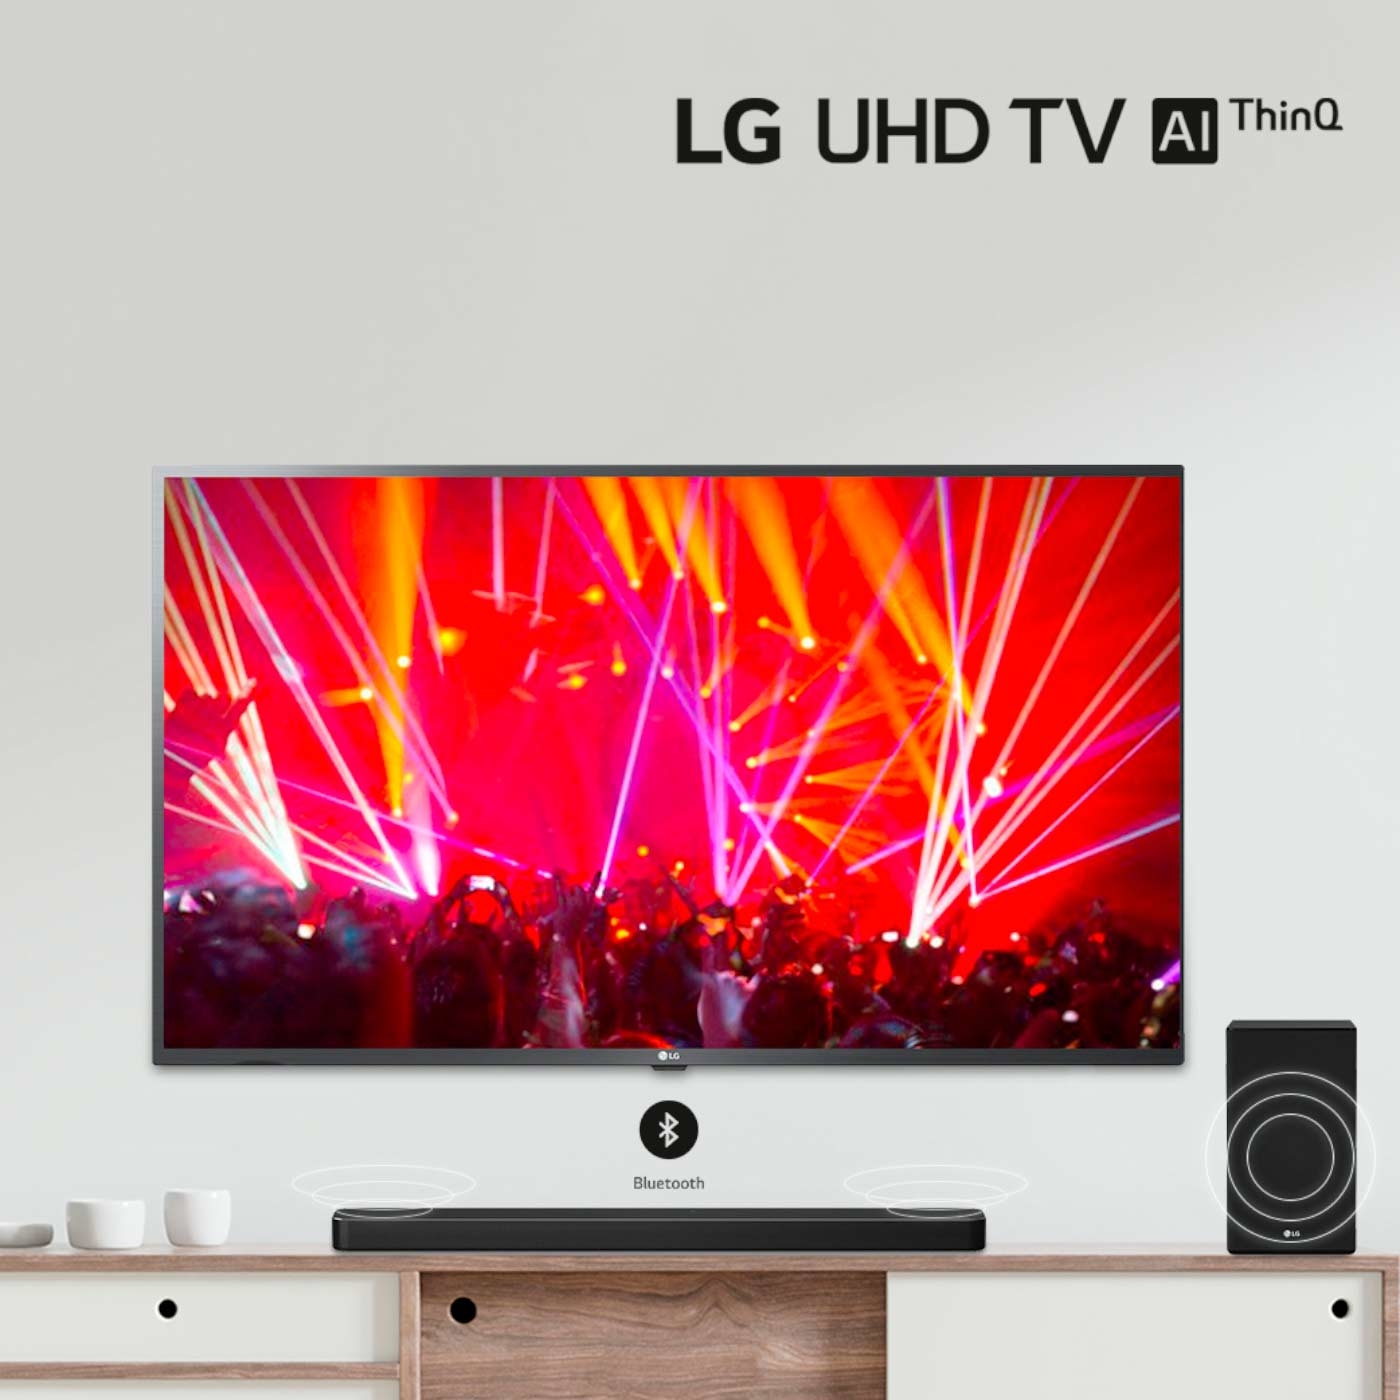 TV LG 55" Pulgadas 139 cm 55UN7310 4K-UHD LED Smart TV